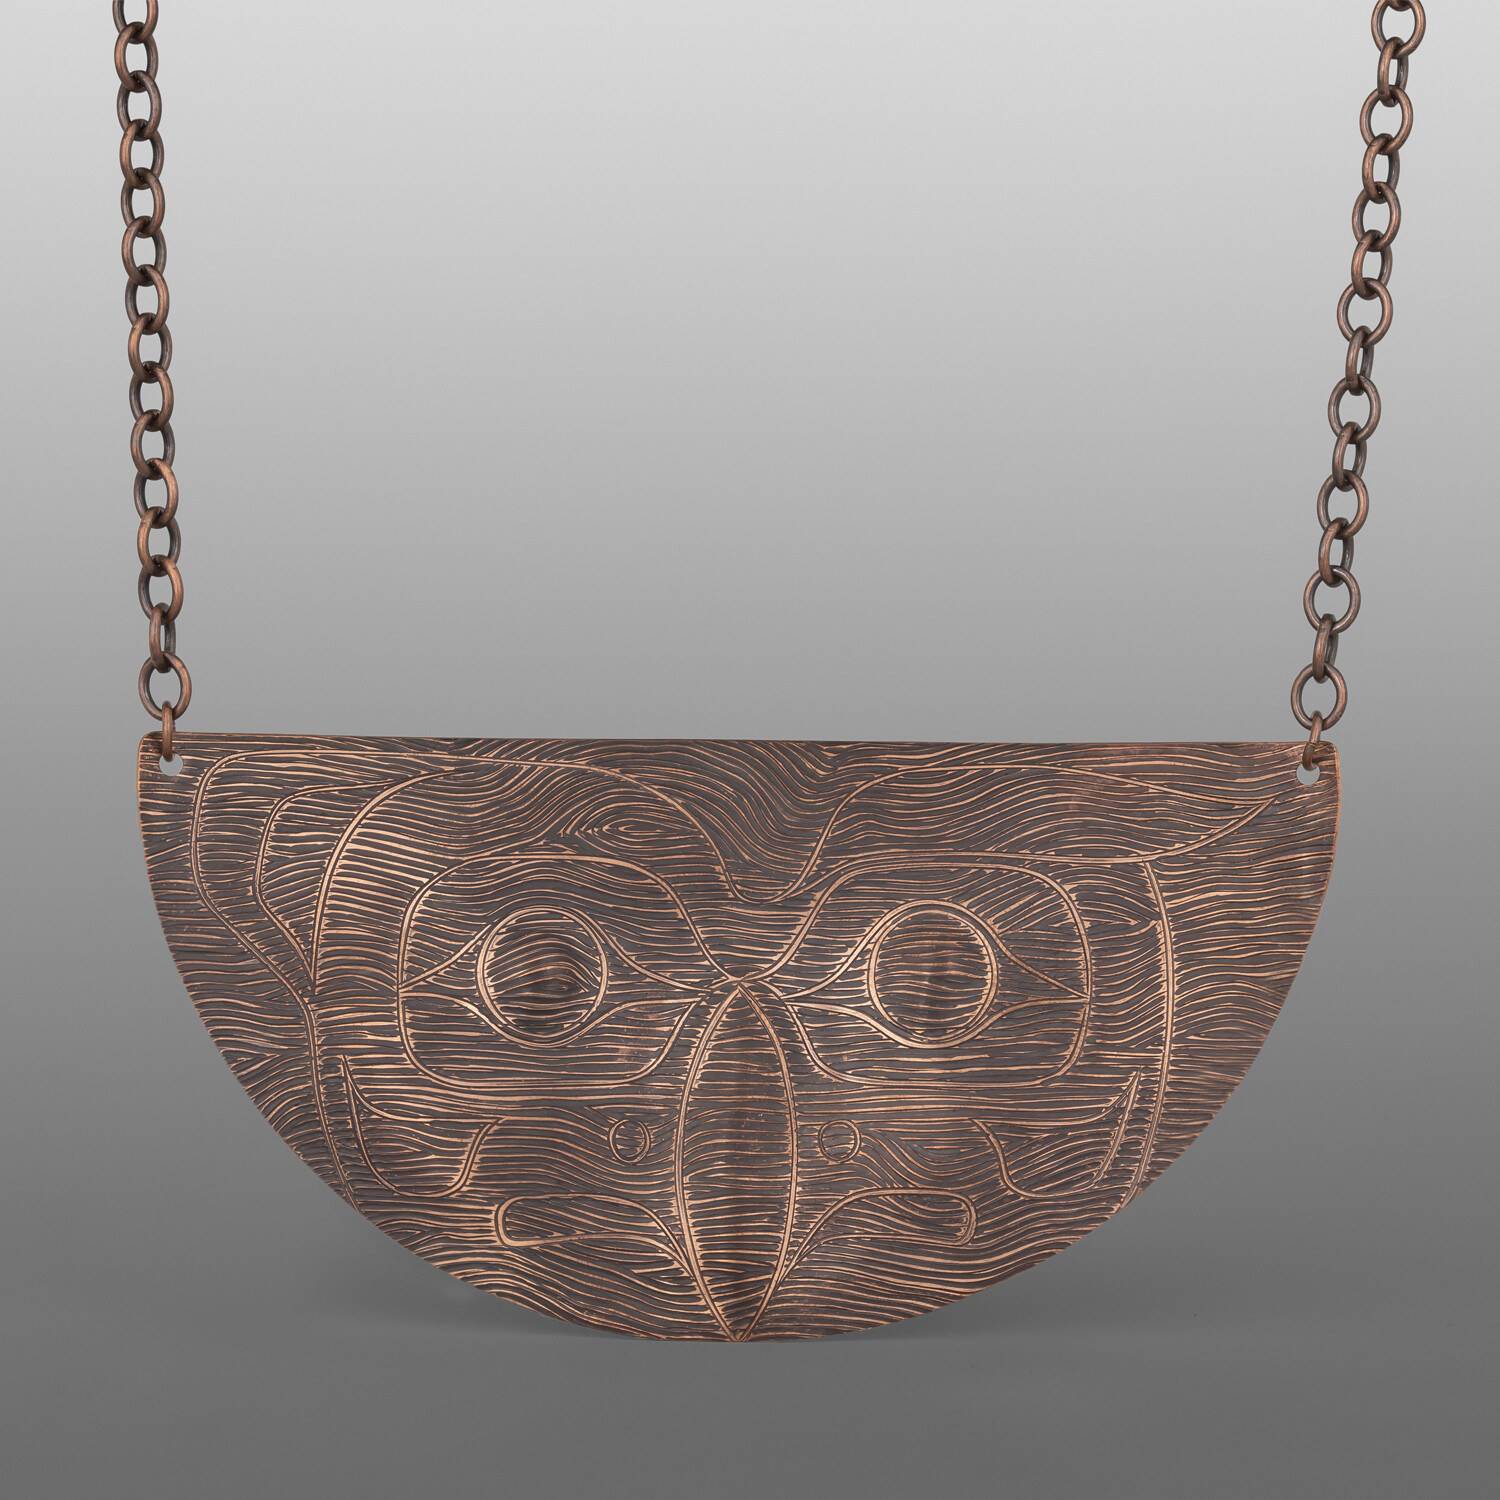 Demilune Owl Necklace
Jennifer Younger
Tlingit
Heat patinated copper
4¾" x 2¼"
$800
